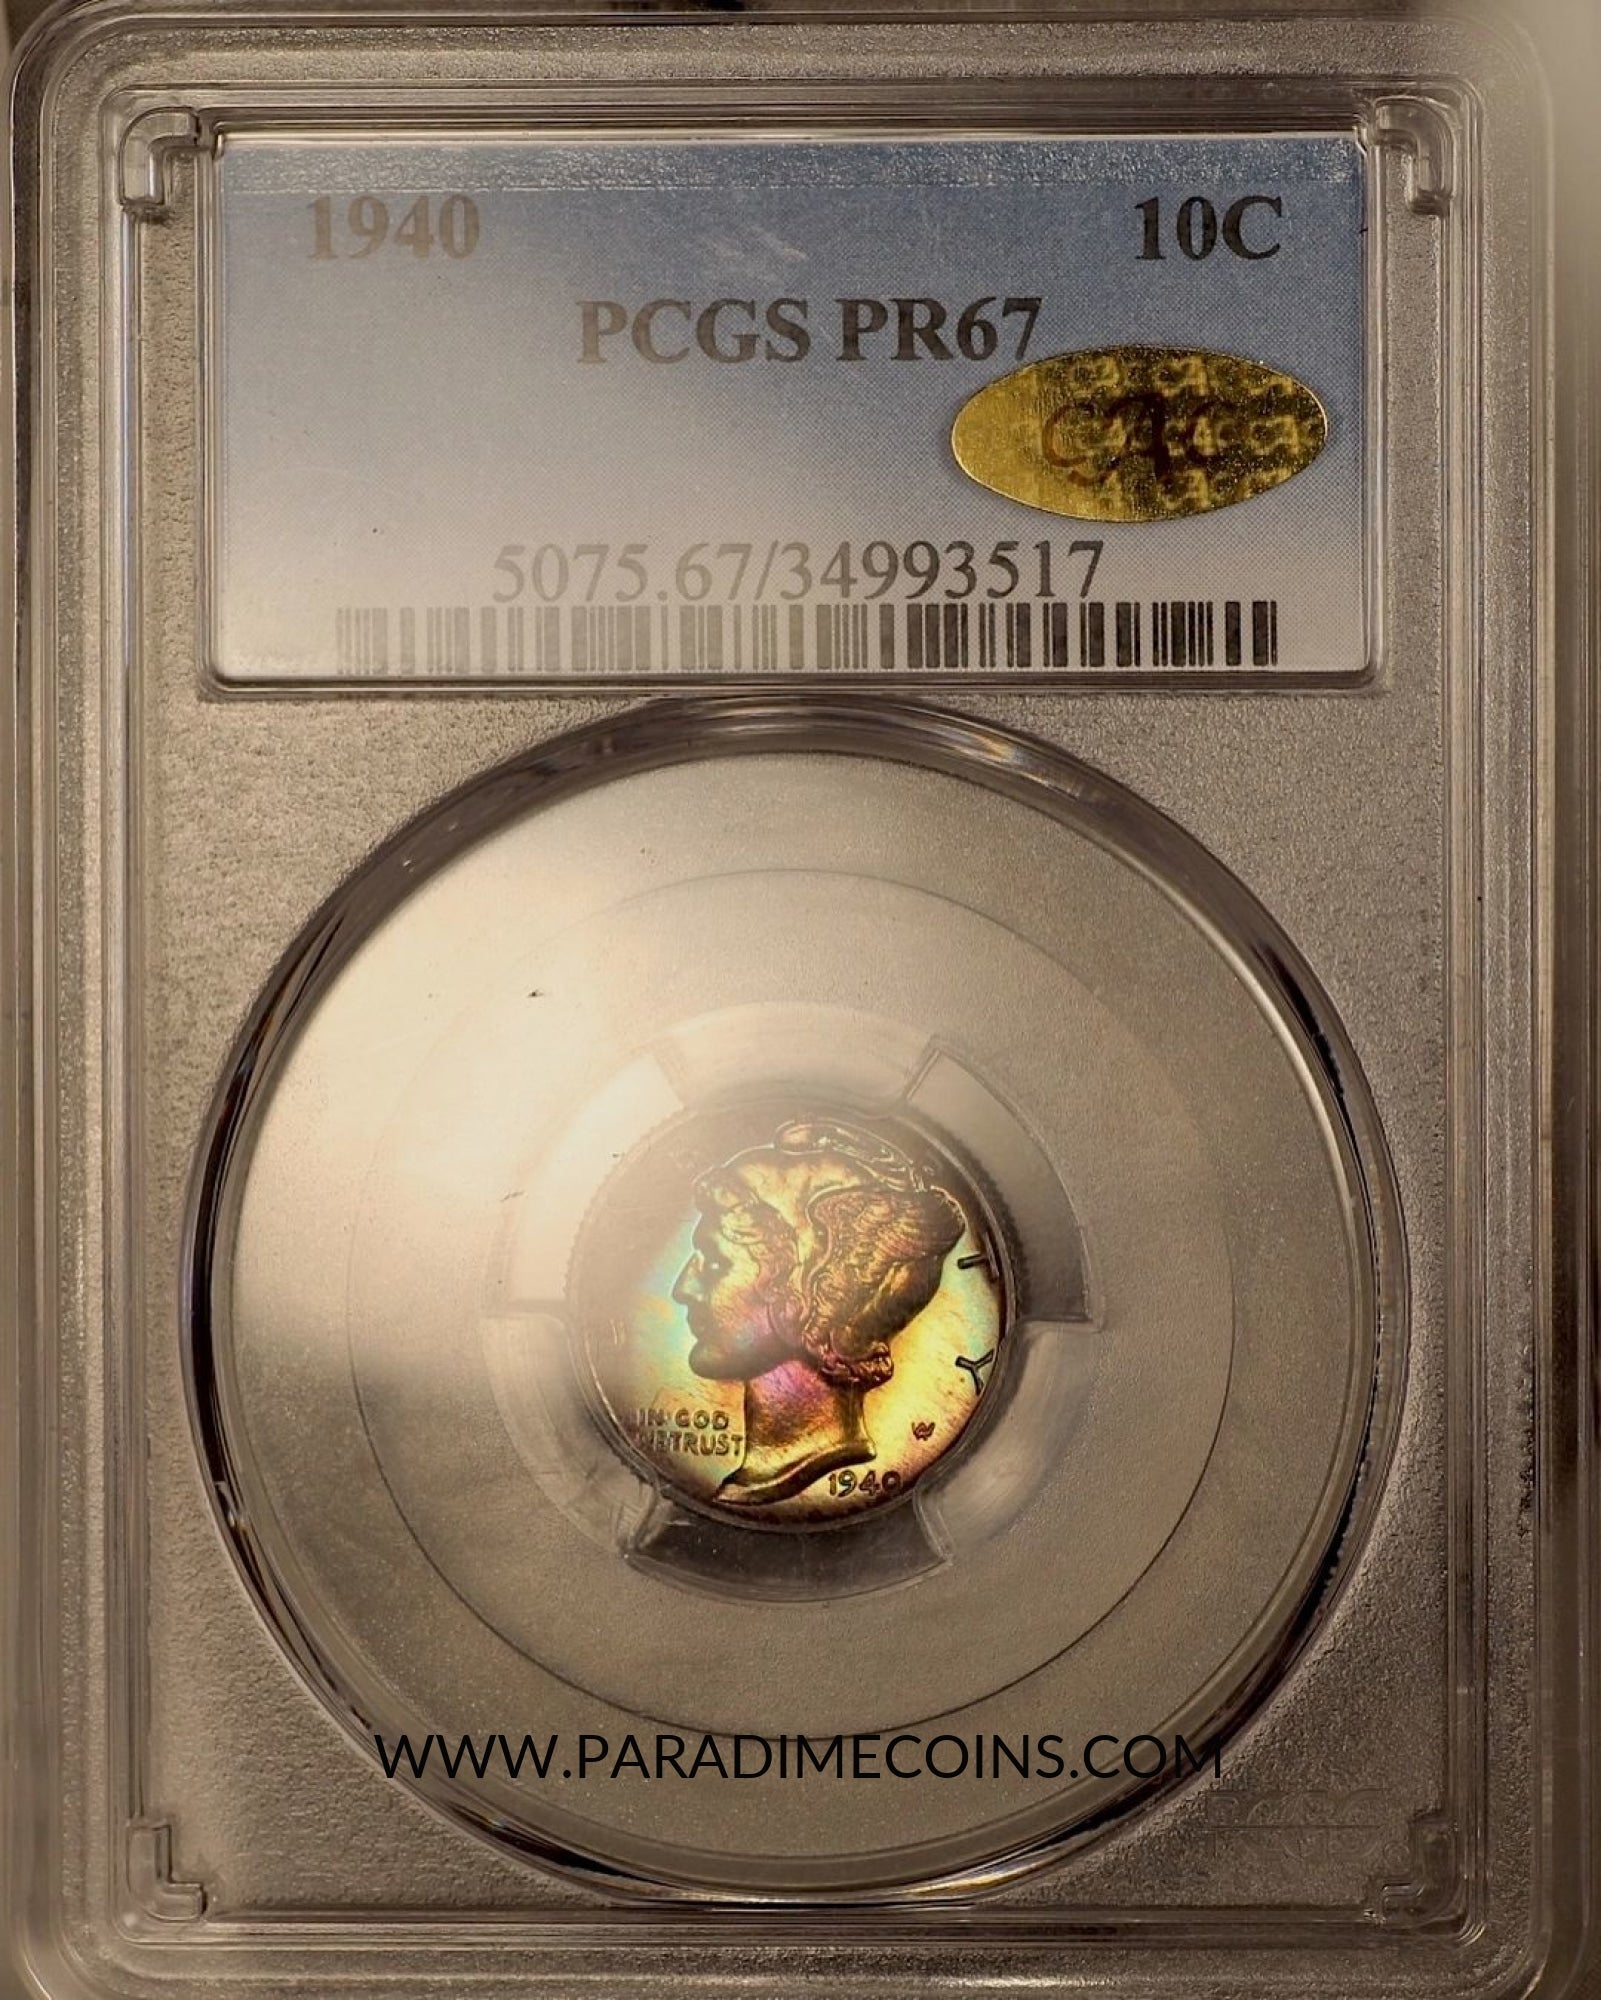 1940 10C PR67 PCGS GOLD CAC - Paradime Coins | PCGS NGC CACG CAC Rare US Numismatic Coins For Sale